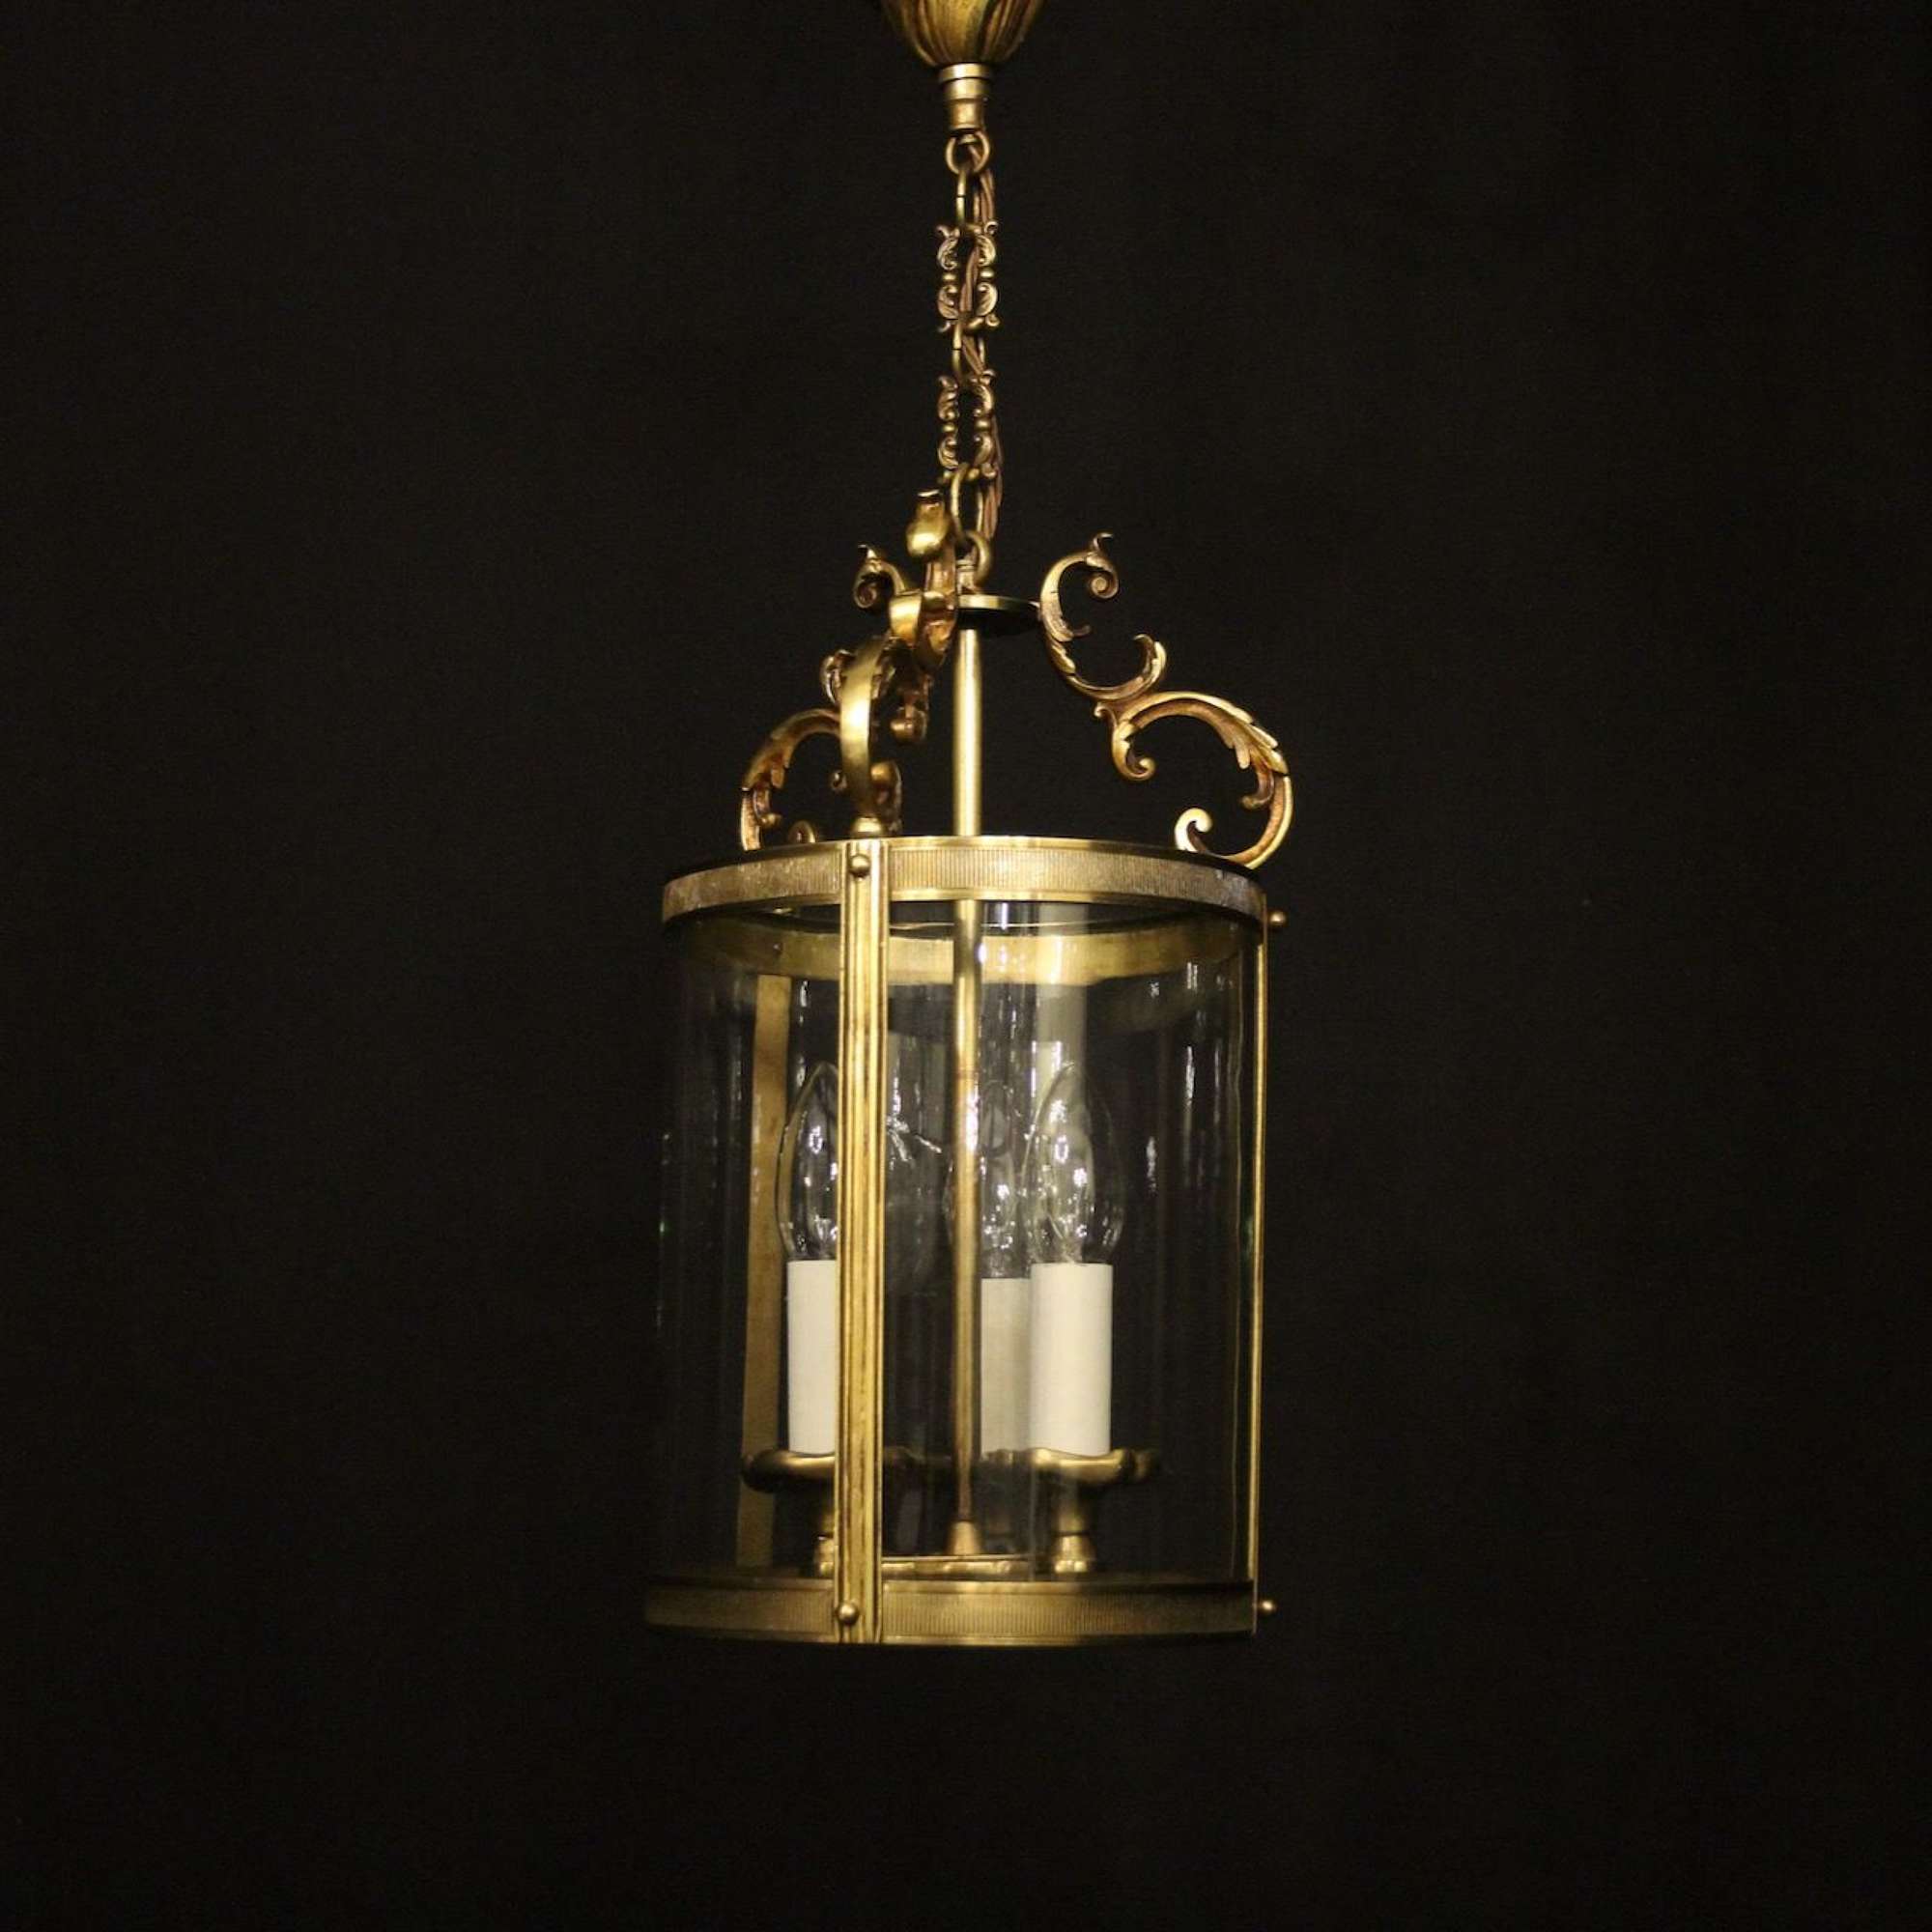 French Gilded Triple Light Convex Hall Lantern